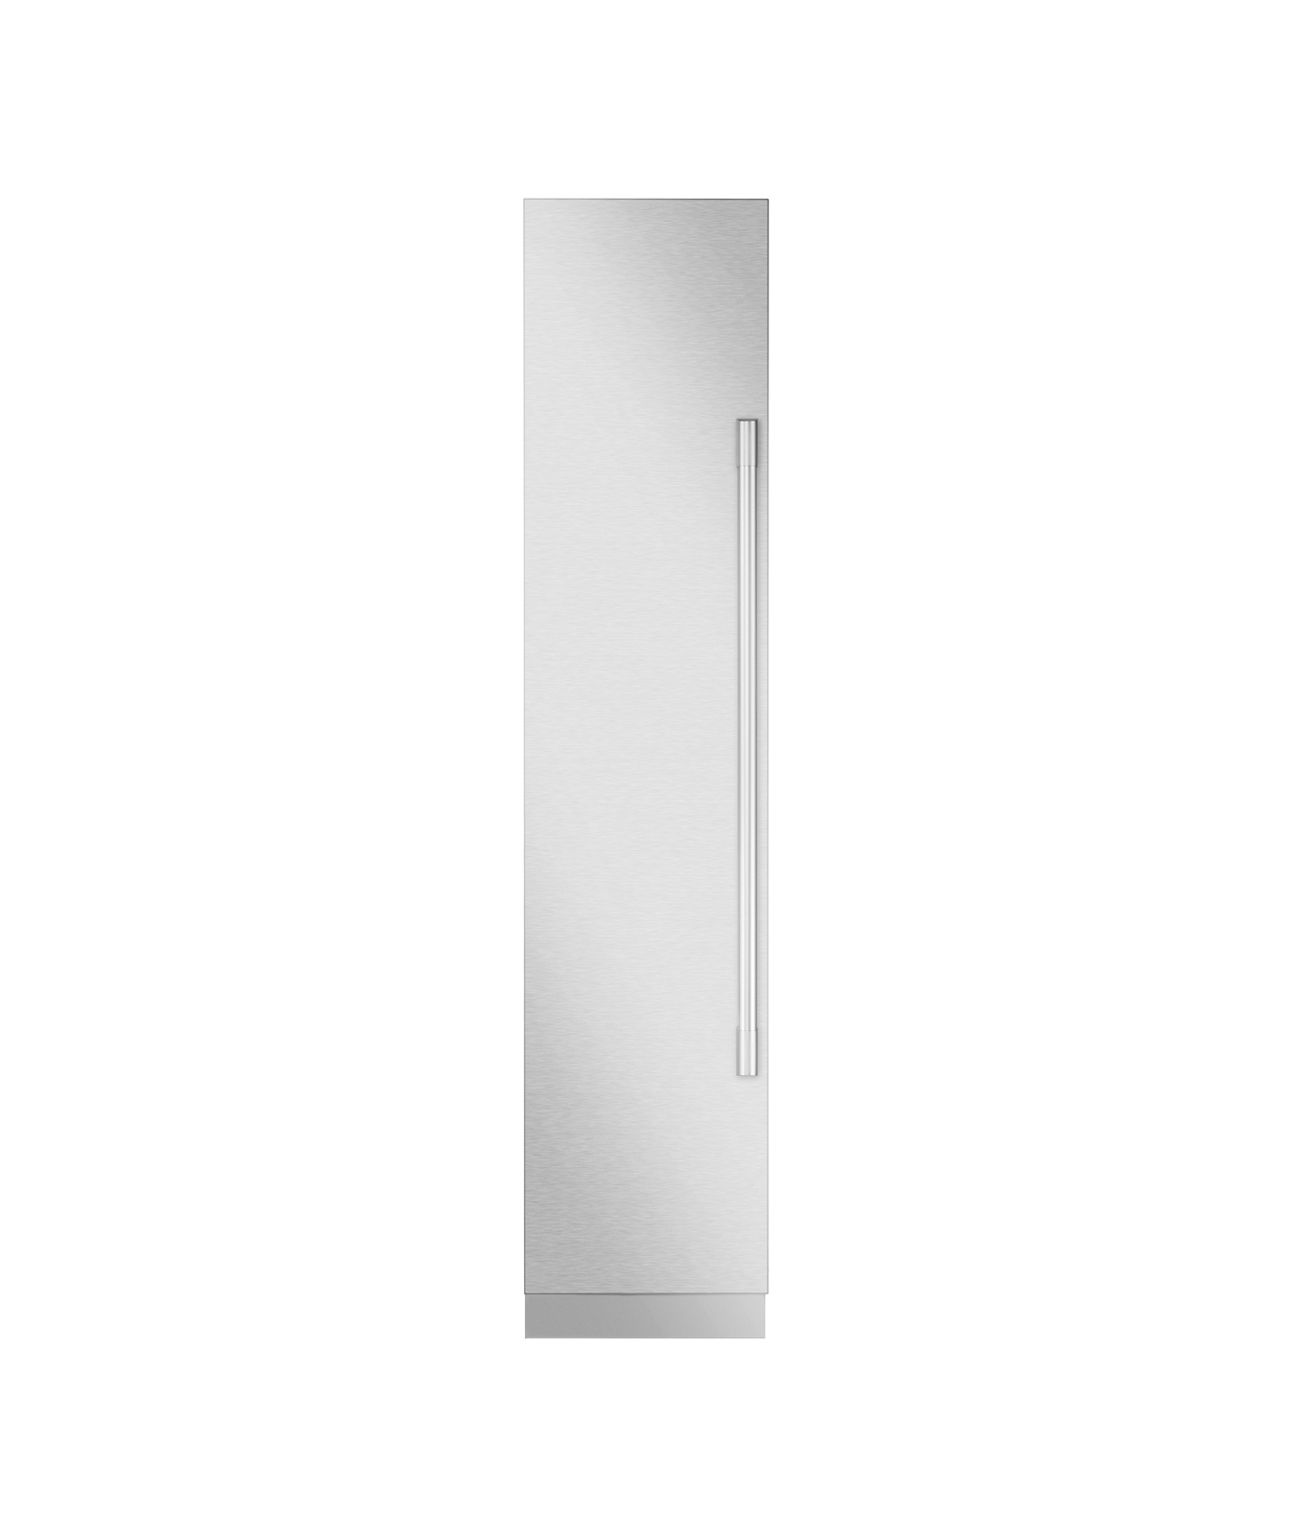 18-inch Integrated Column Freezer